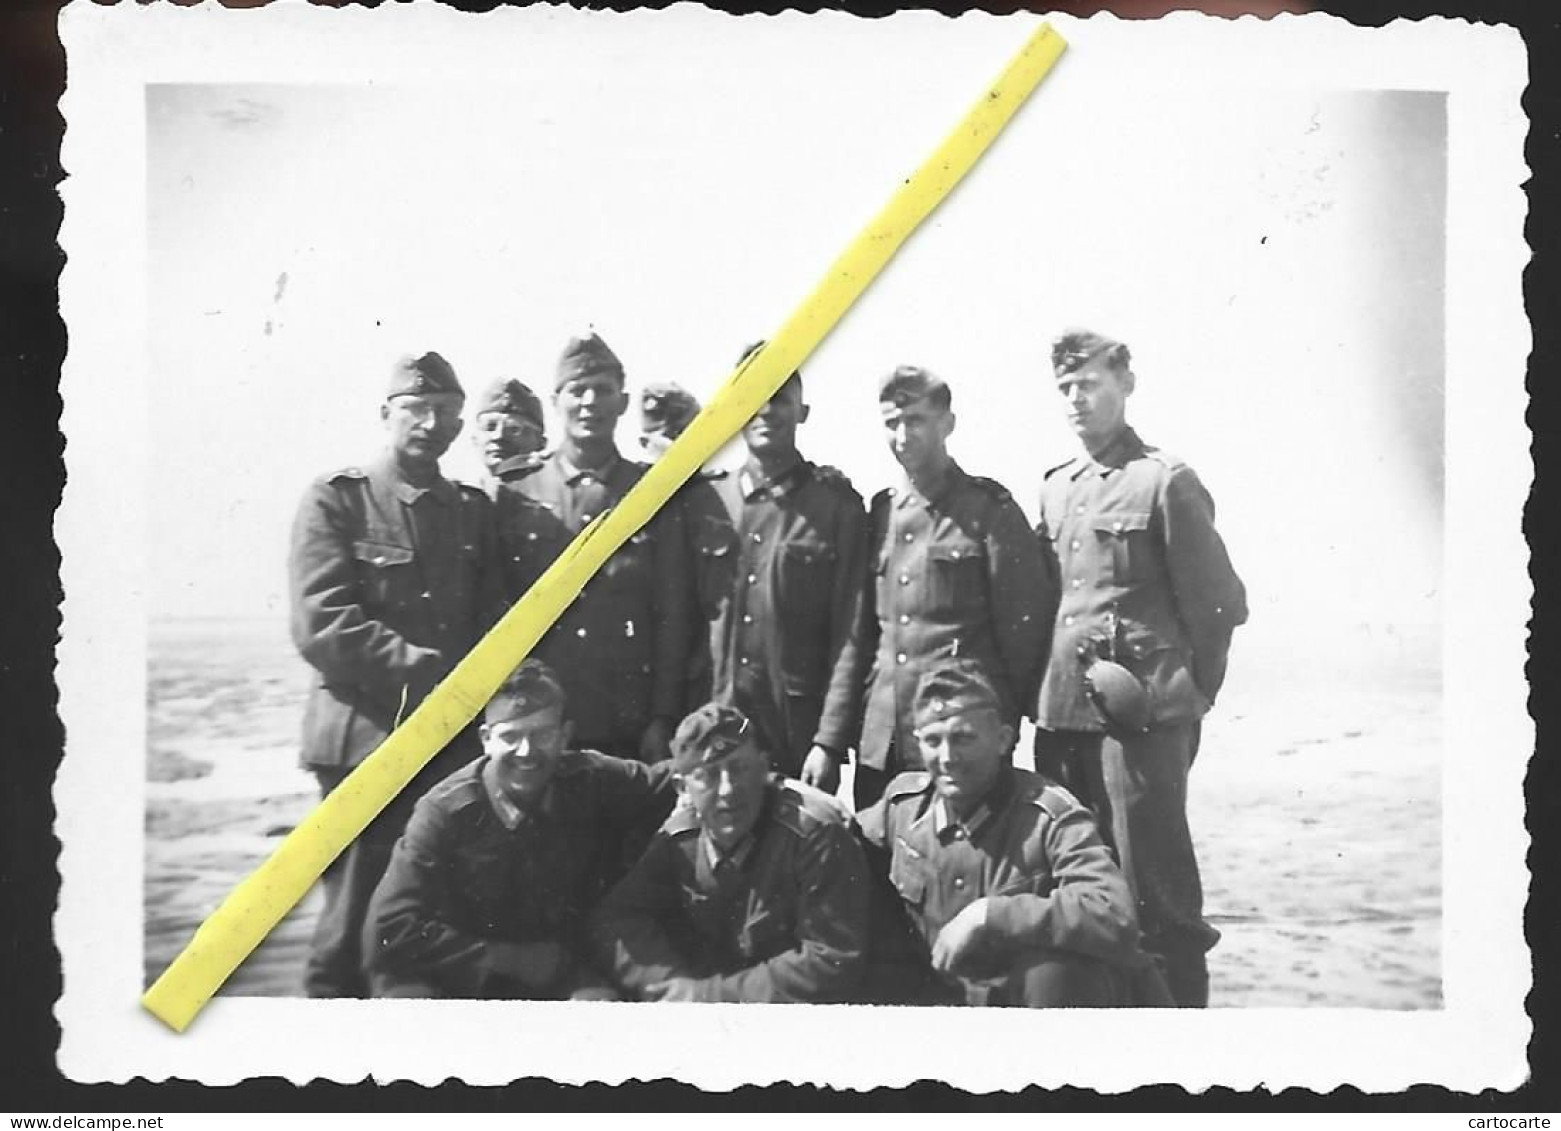 64 039 0524 WW2 WK2 BIARRITZ  OCCUPATION SOLDATS  ALLEMANDS 1940 / 1944 - Krieg, Militär